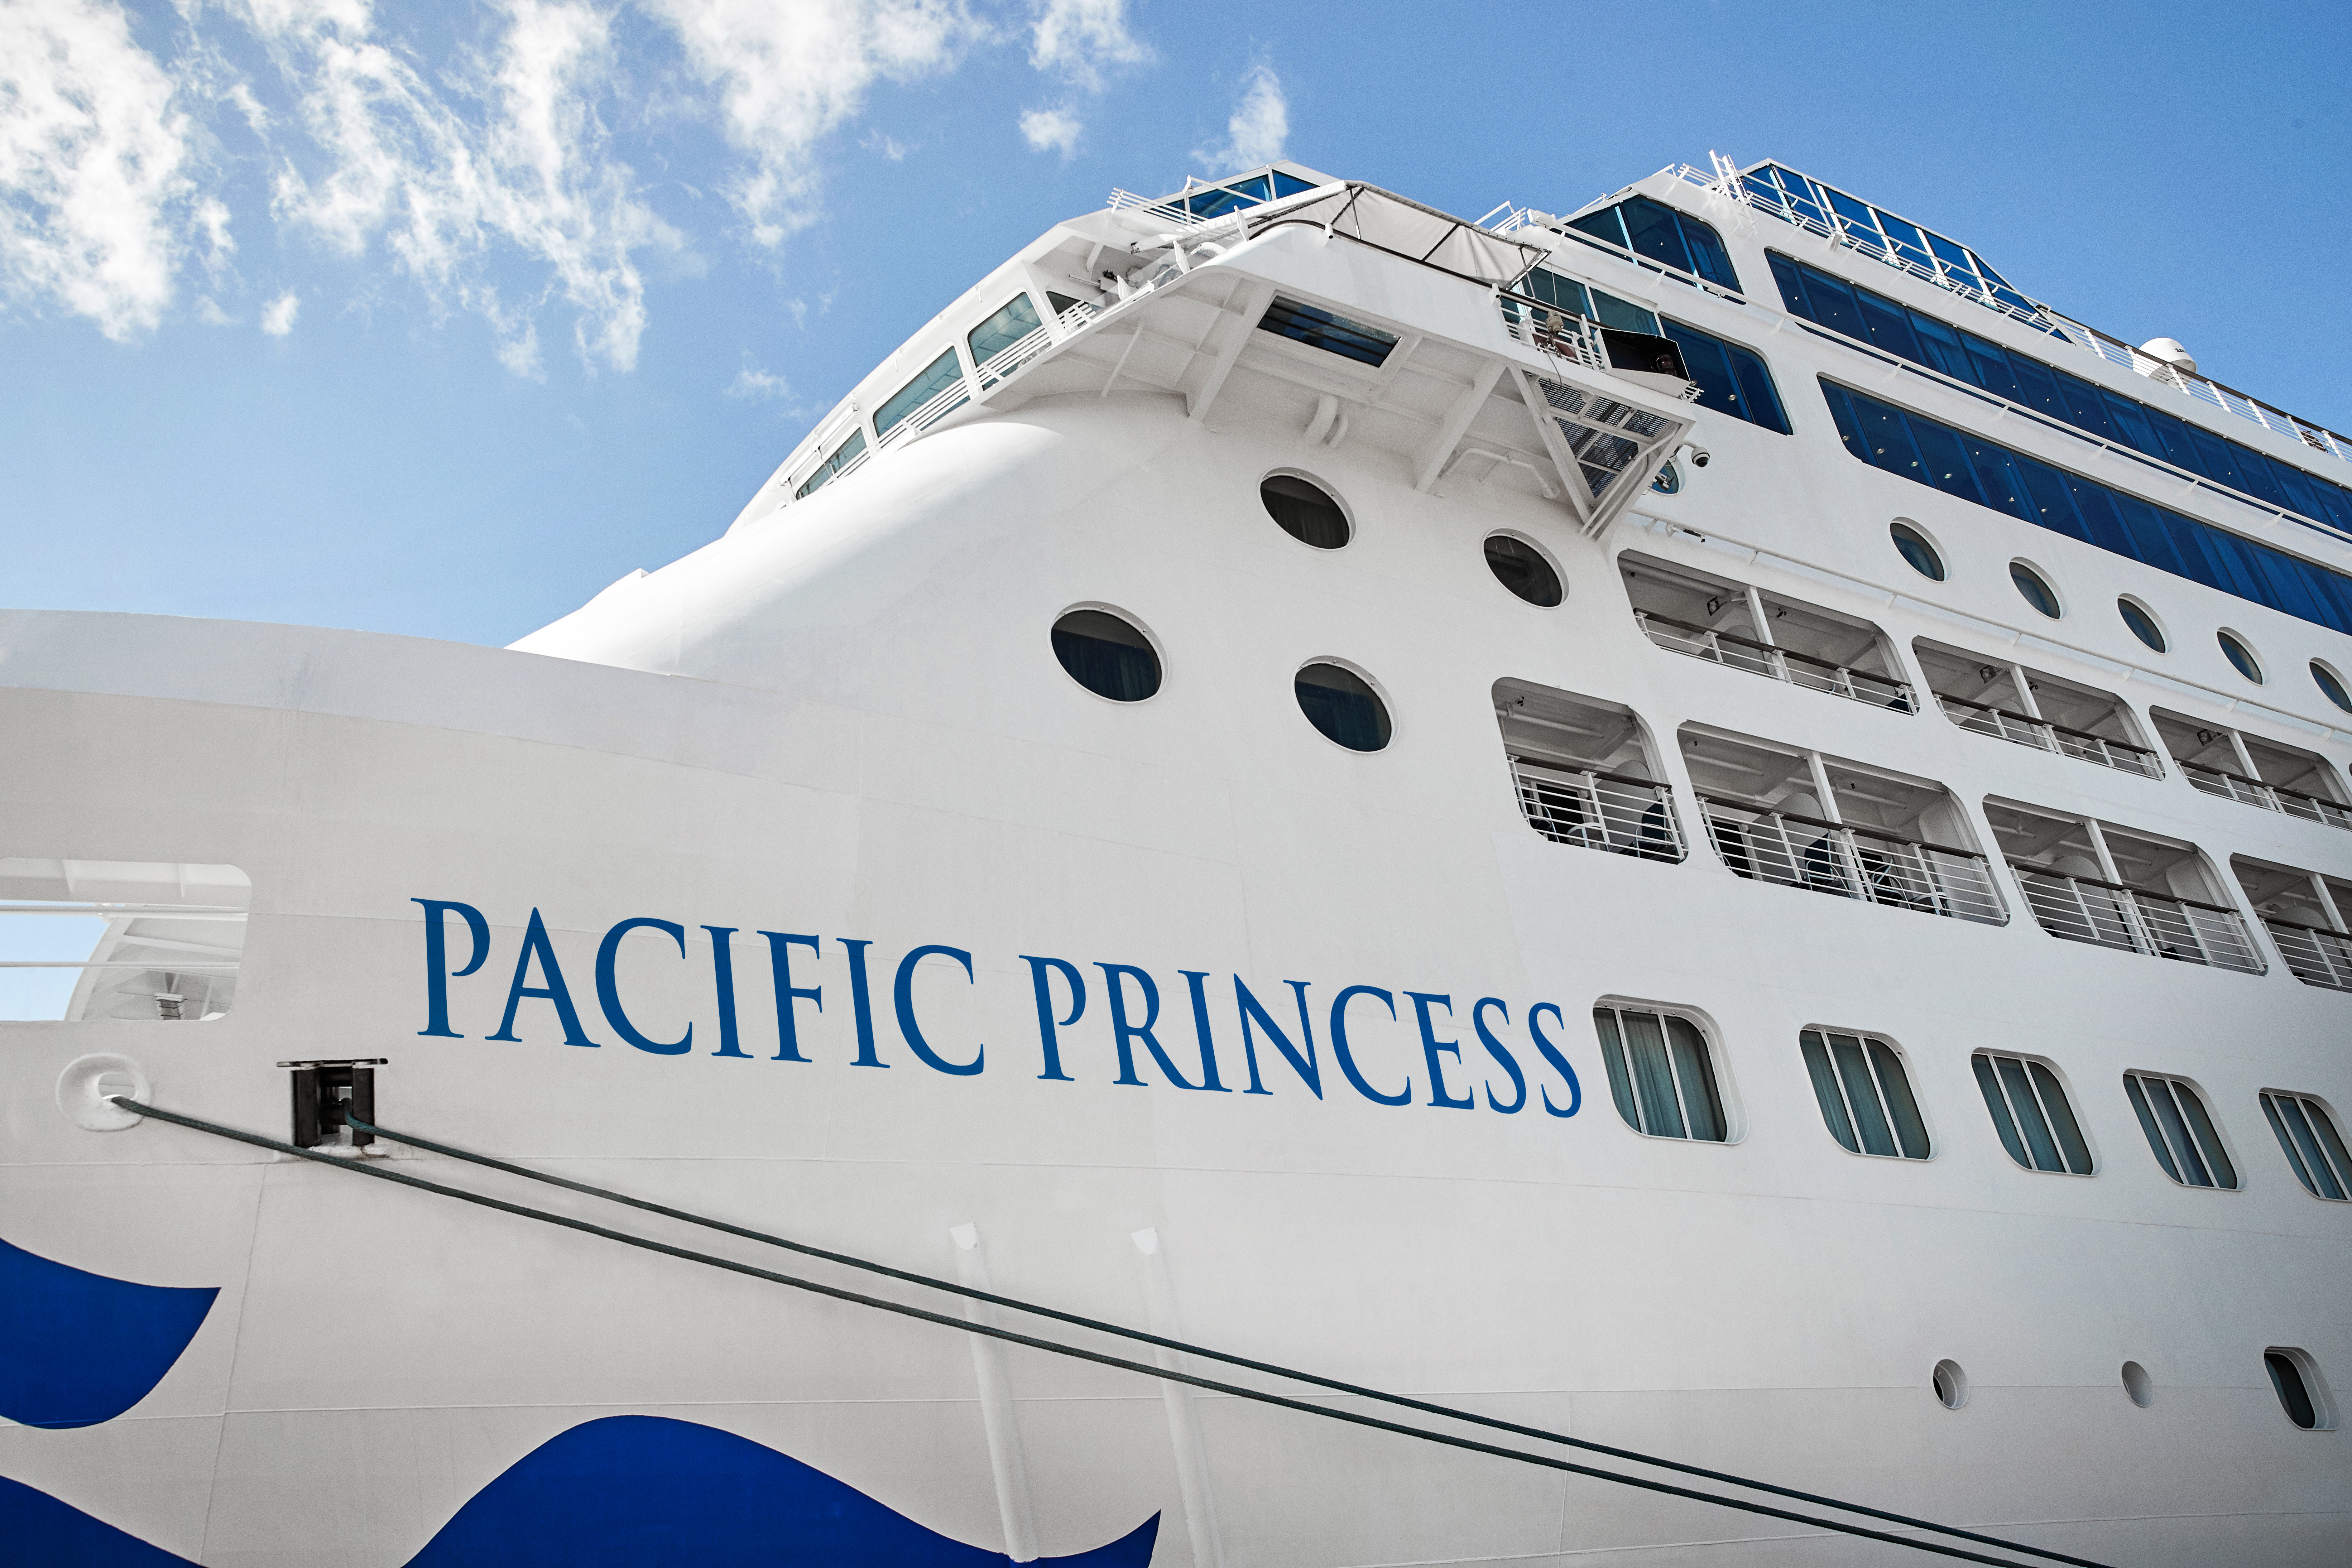 Pacific Princess name